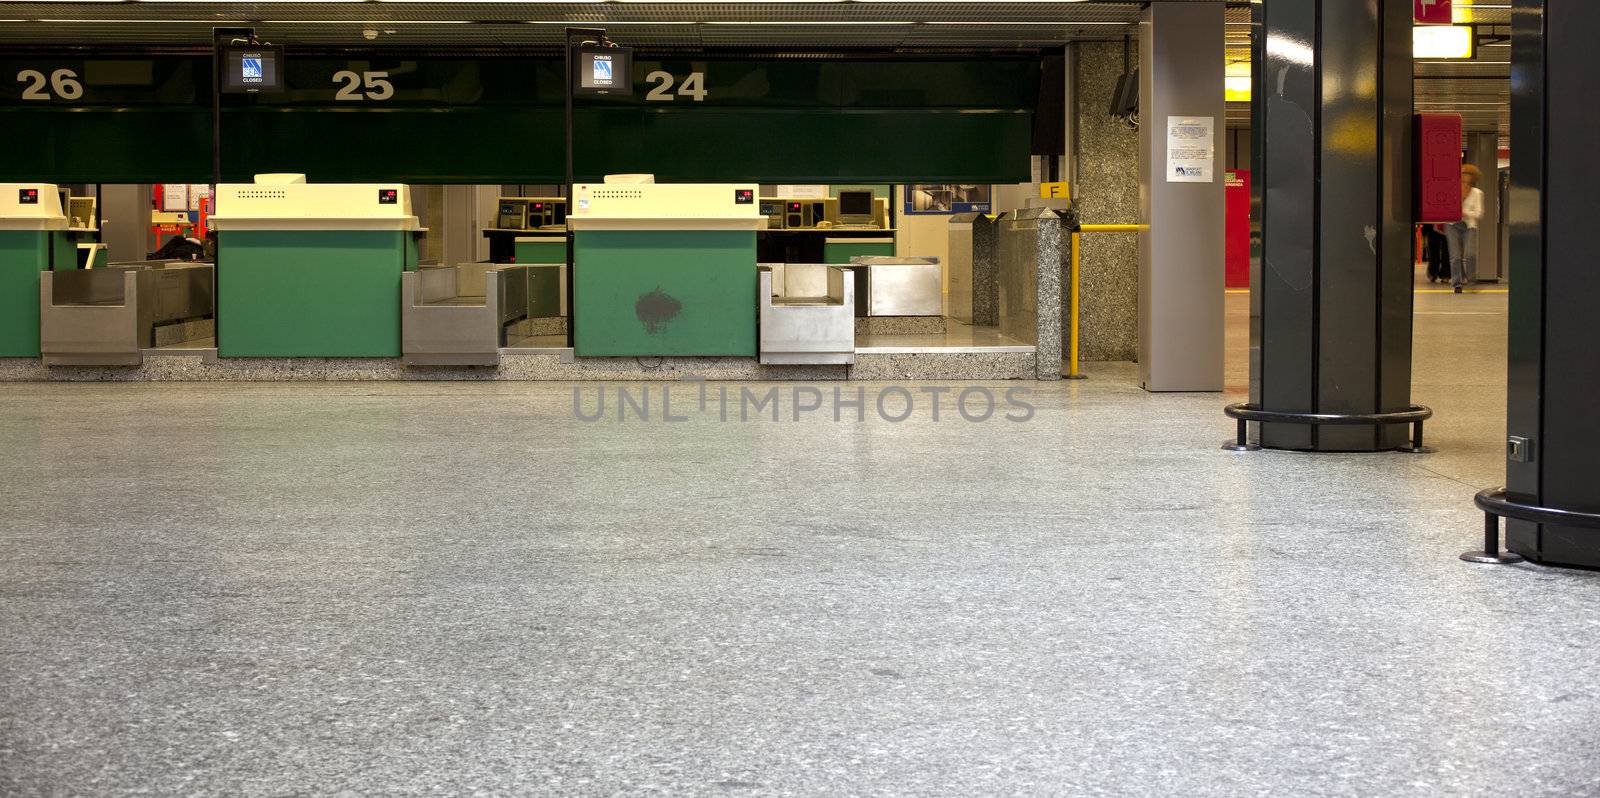 Green desks in airport hall